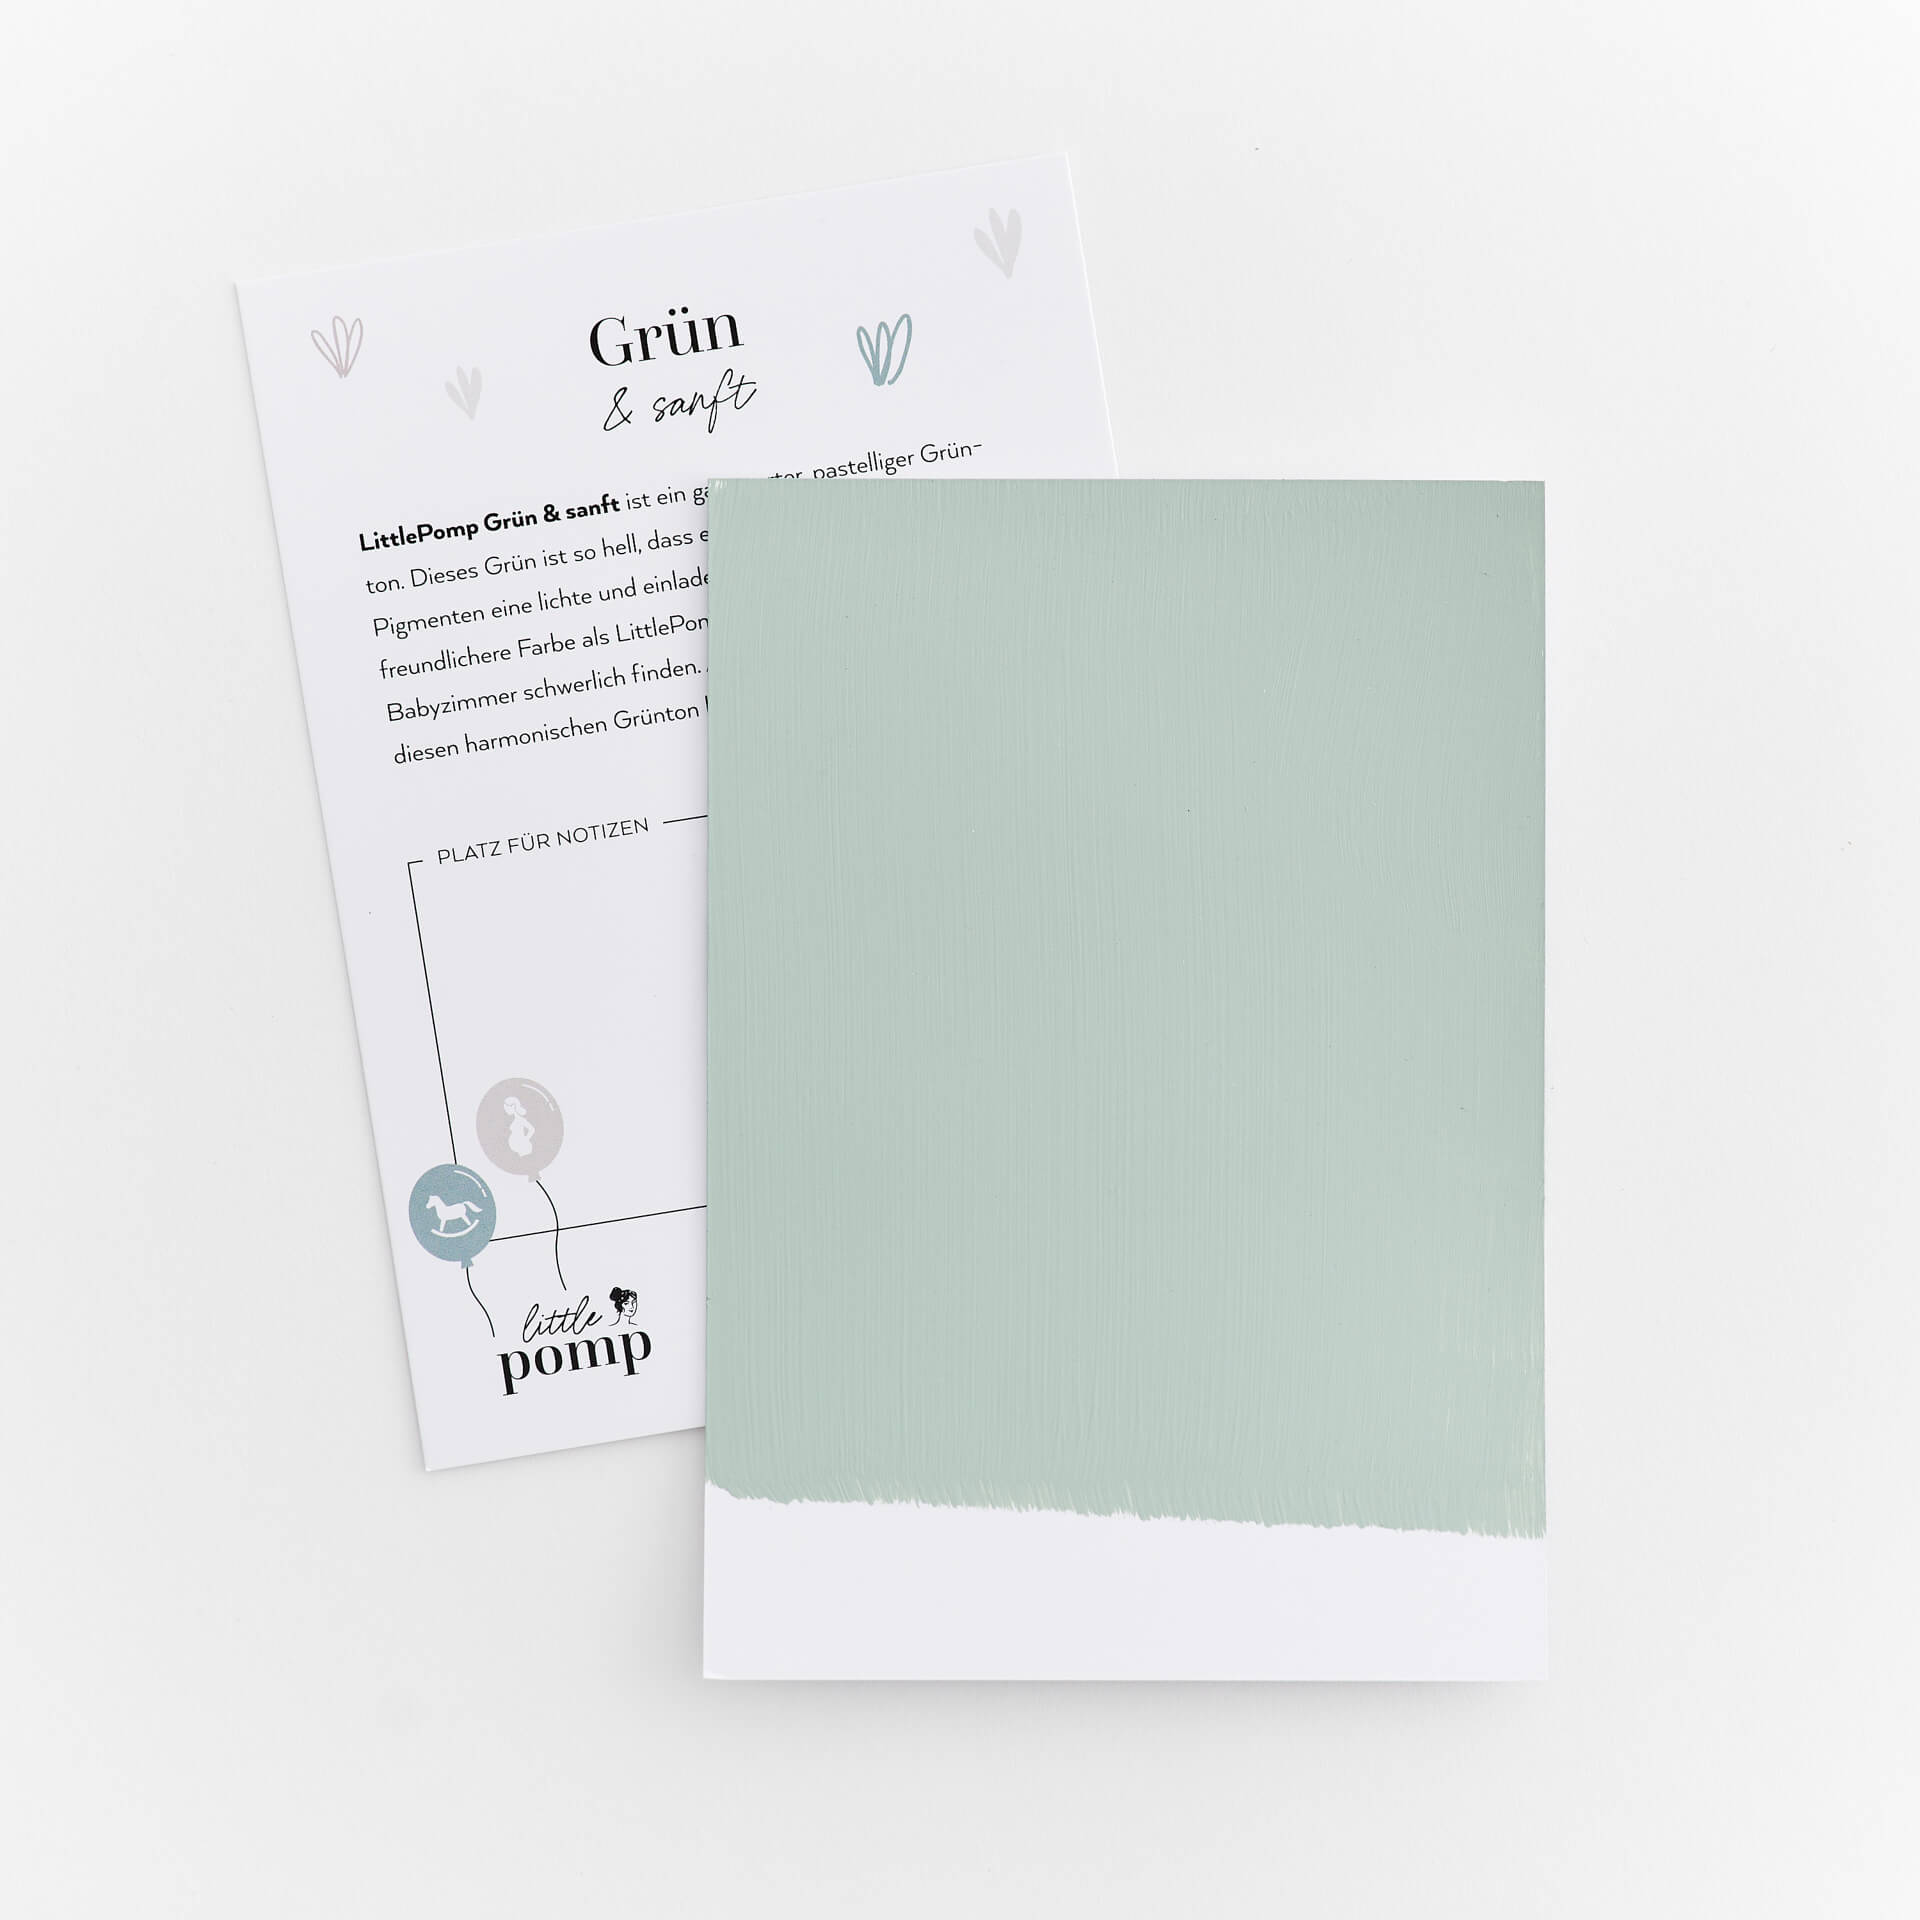 LittlePomp Green & Gentle - colour sample A6